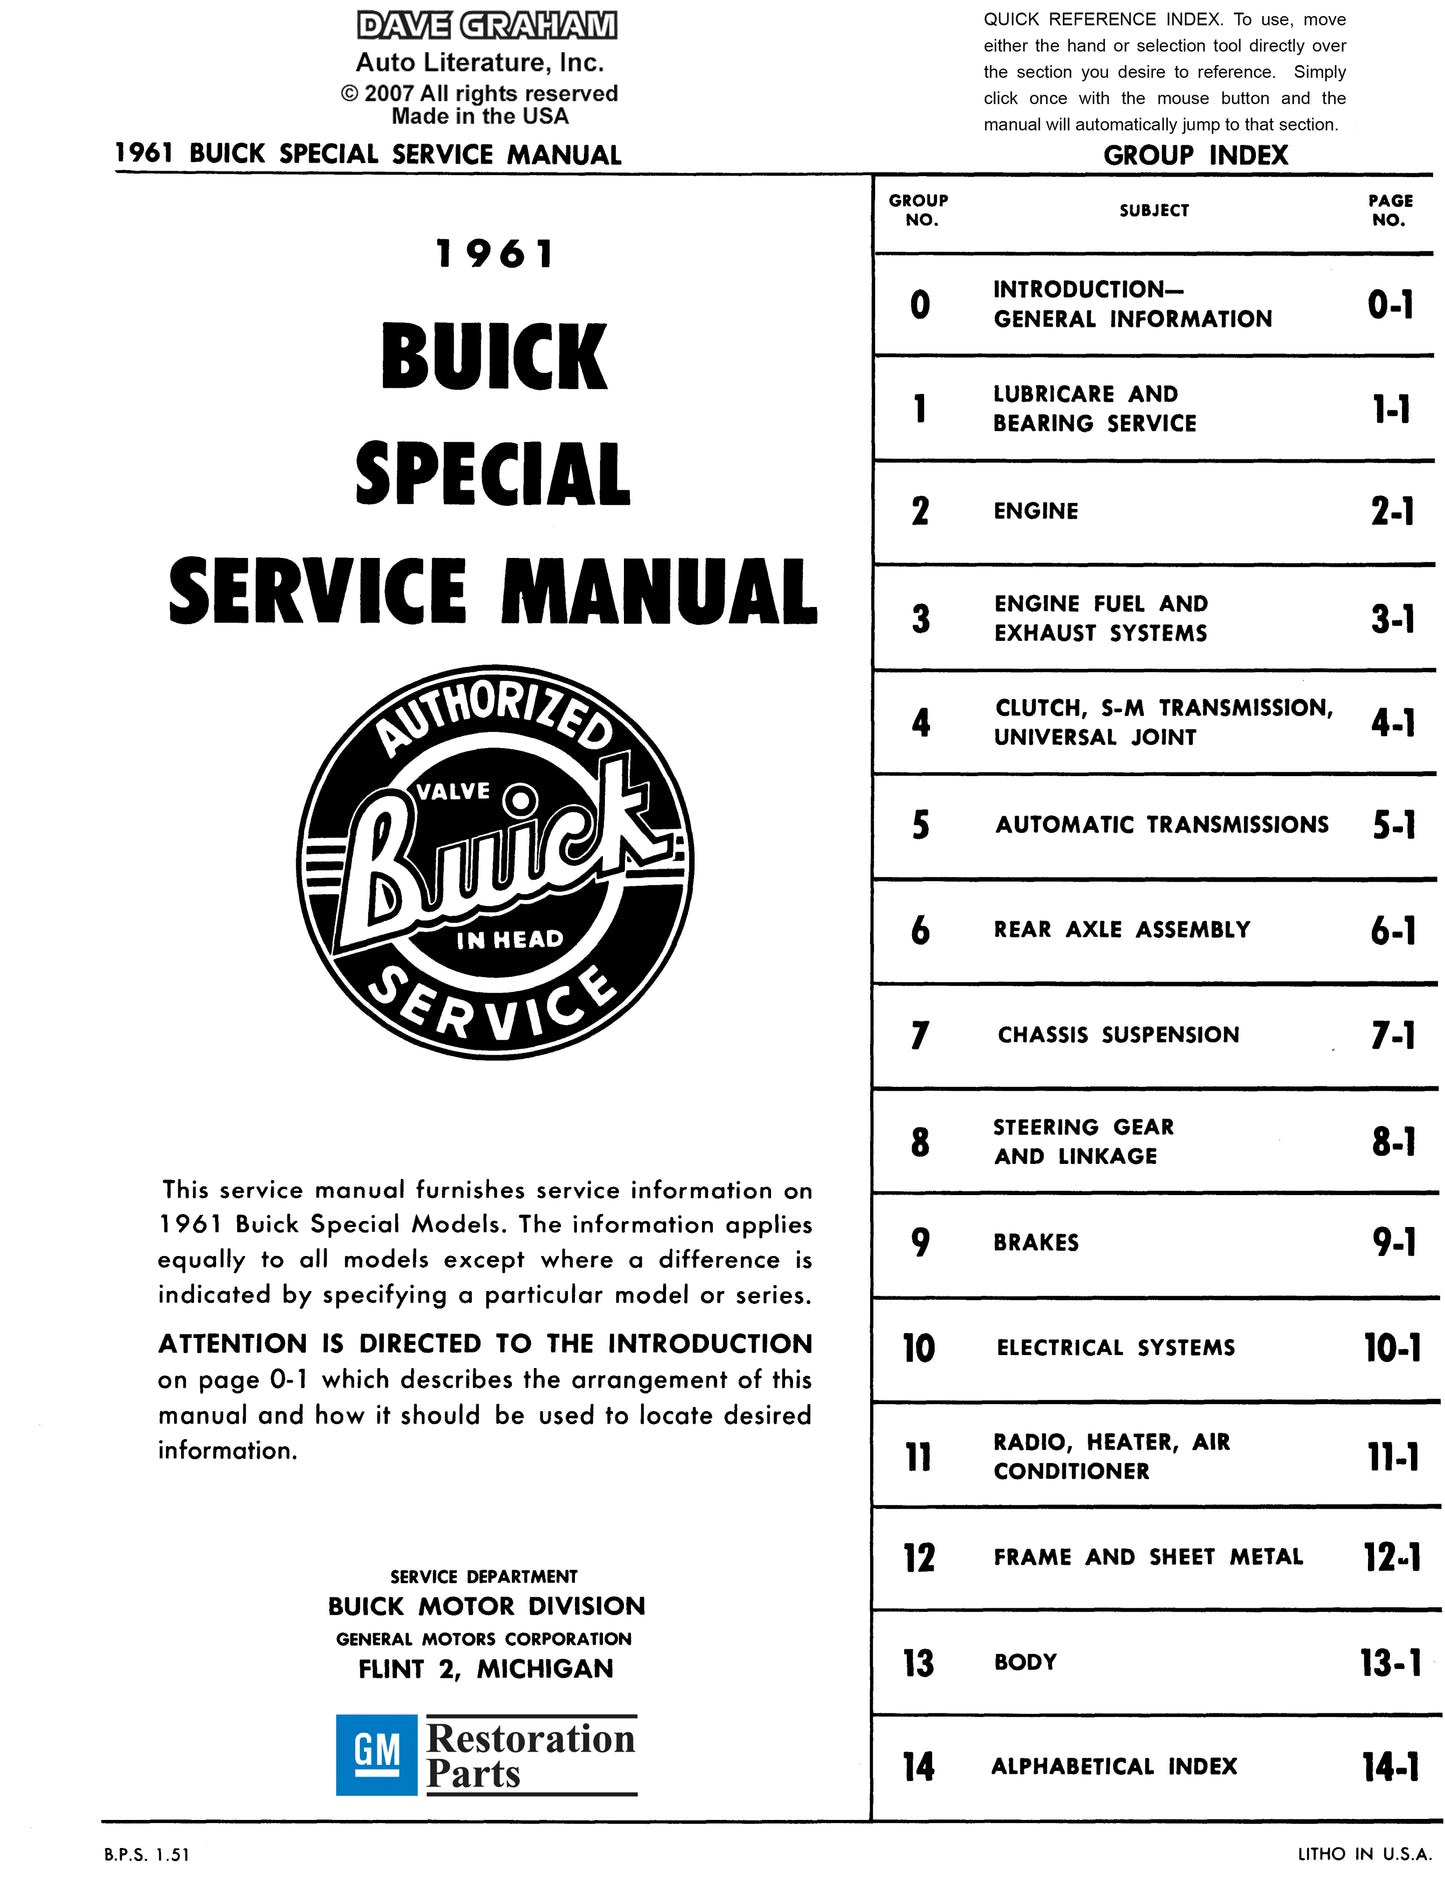 1961 Buick Repair Manuals - All Models